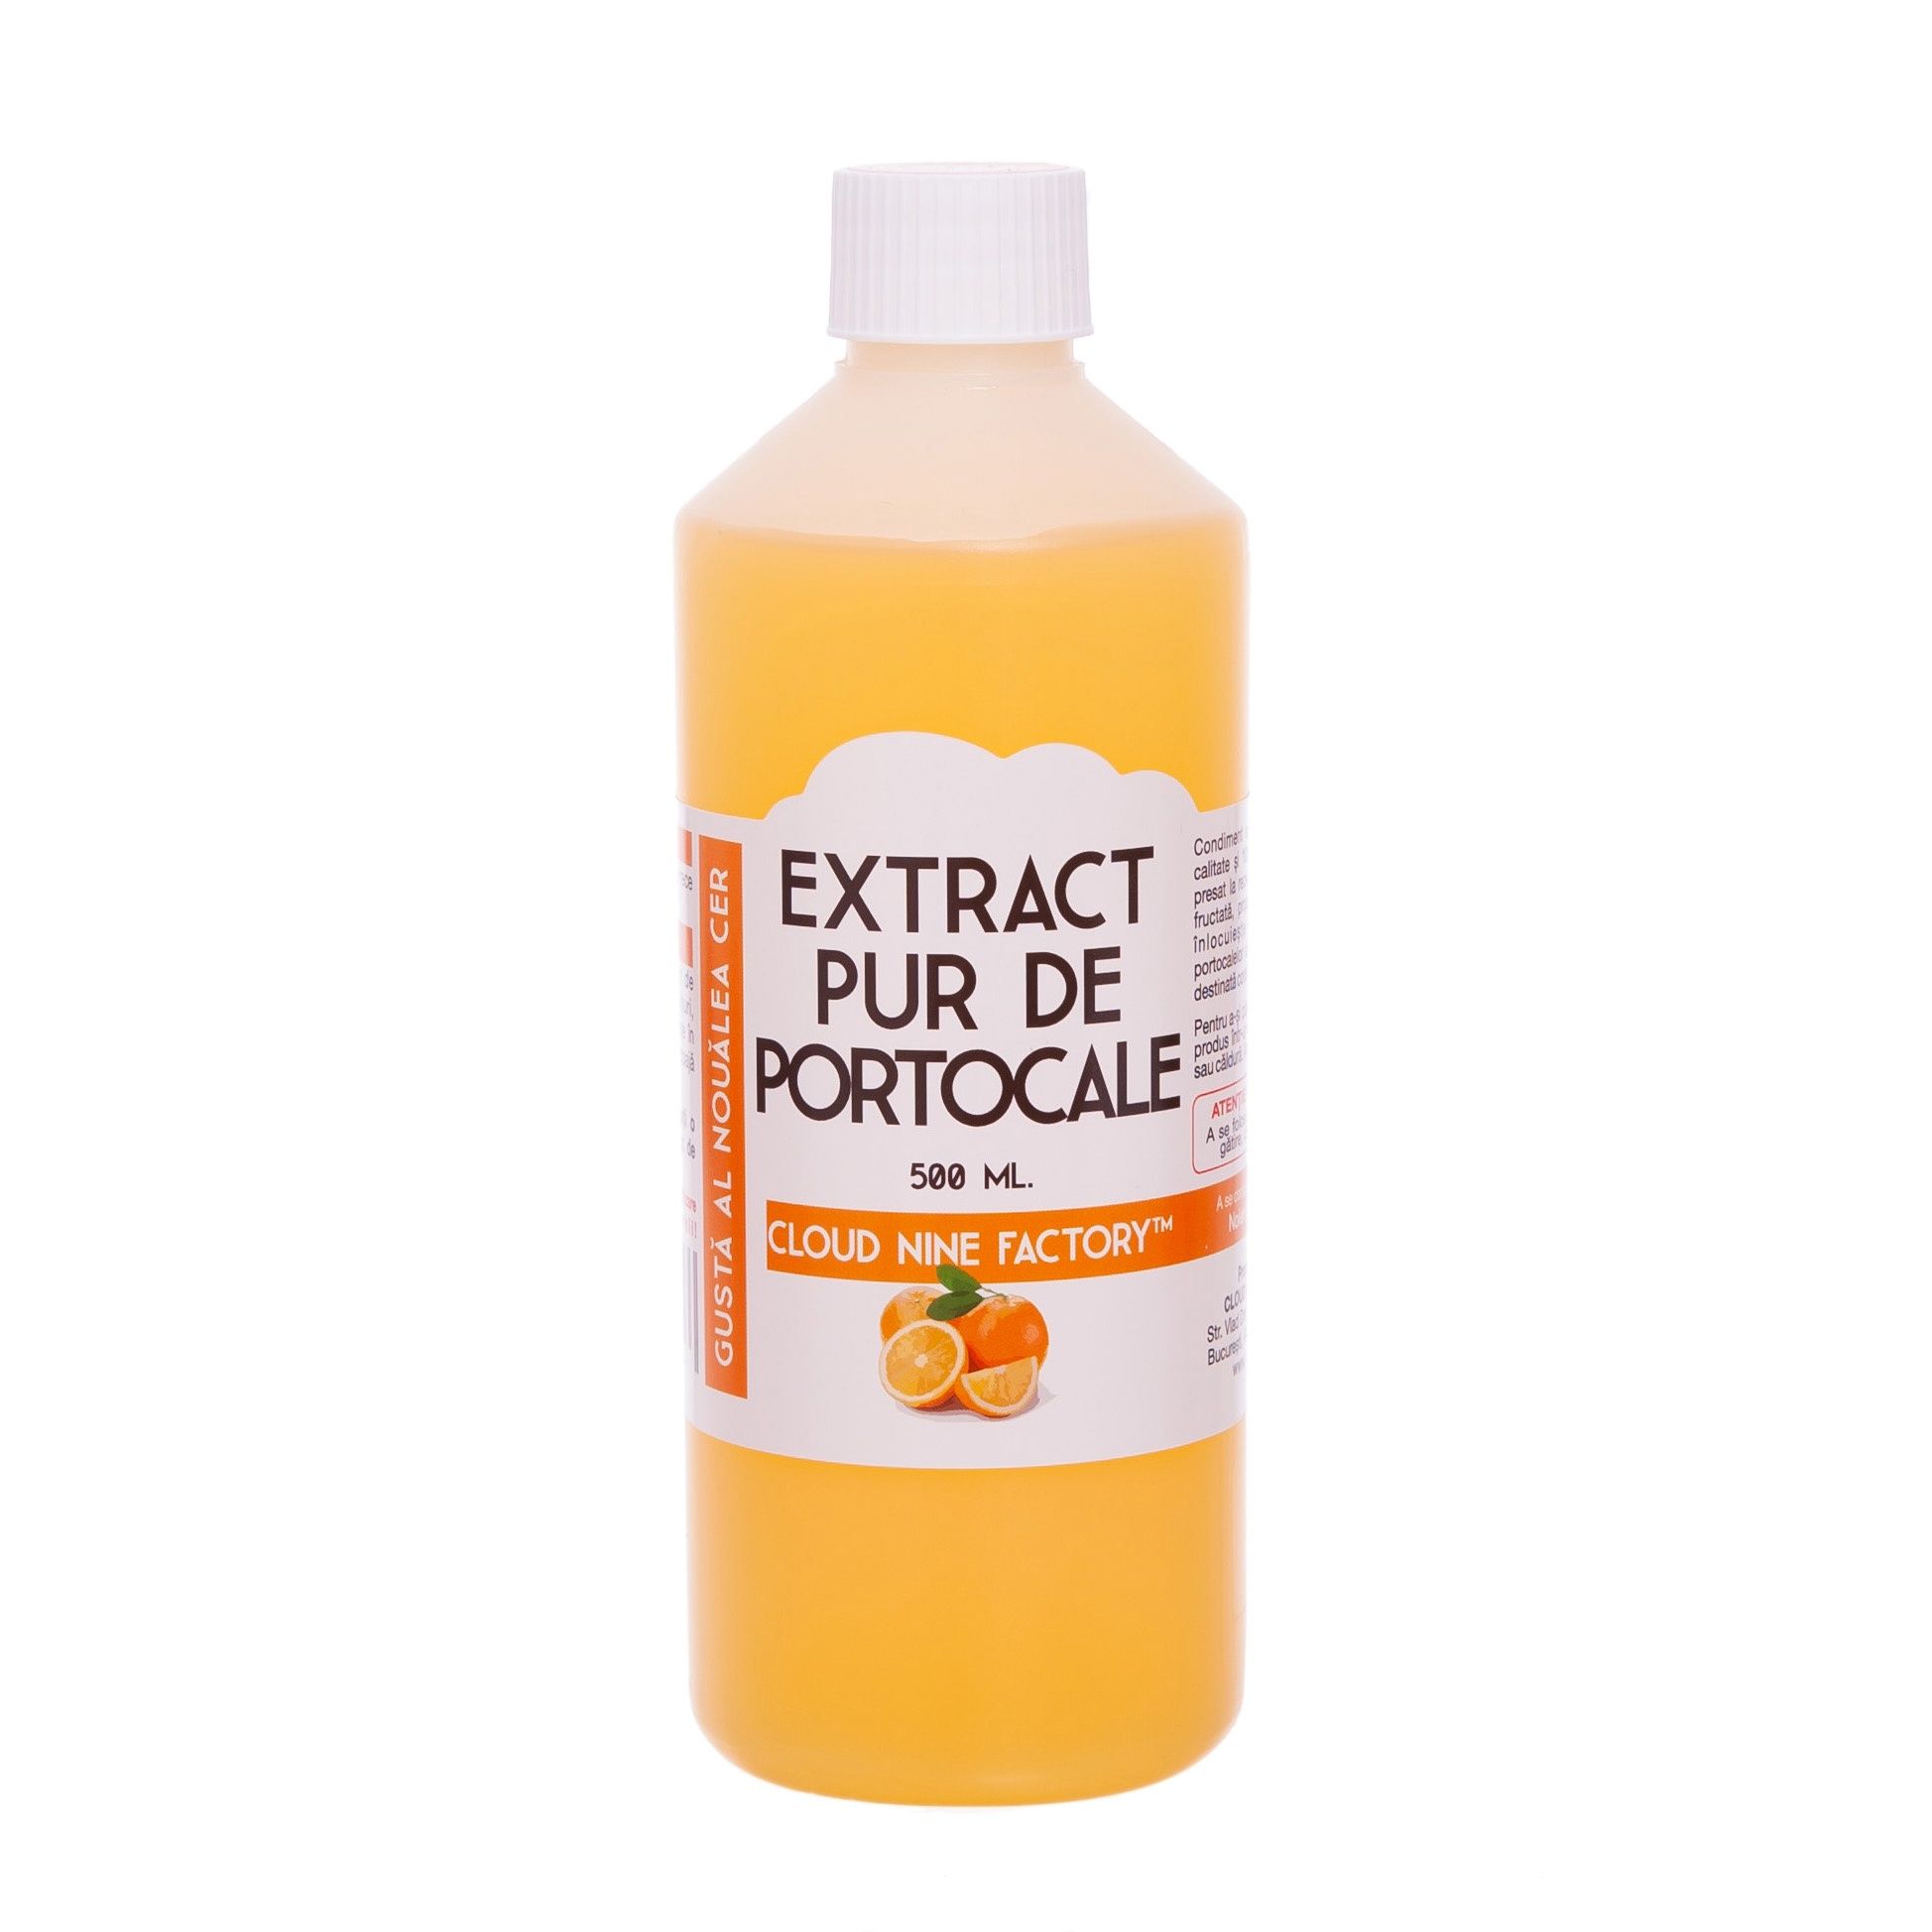 Extract Pur de Portocale (500 ml.) extract pur de portocale (500 ml.) - IMG 2641 - Extract Pur de Portocale (500 ml.) magazin online - IMG 2641 - Cloud Nine Factory™ ⛅ Magazin online